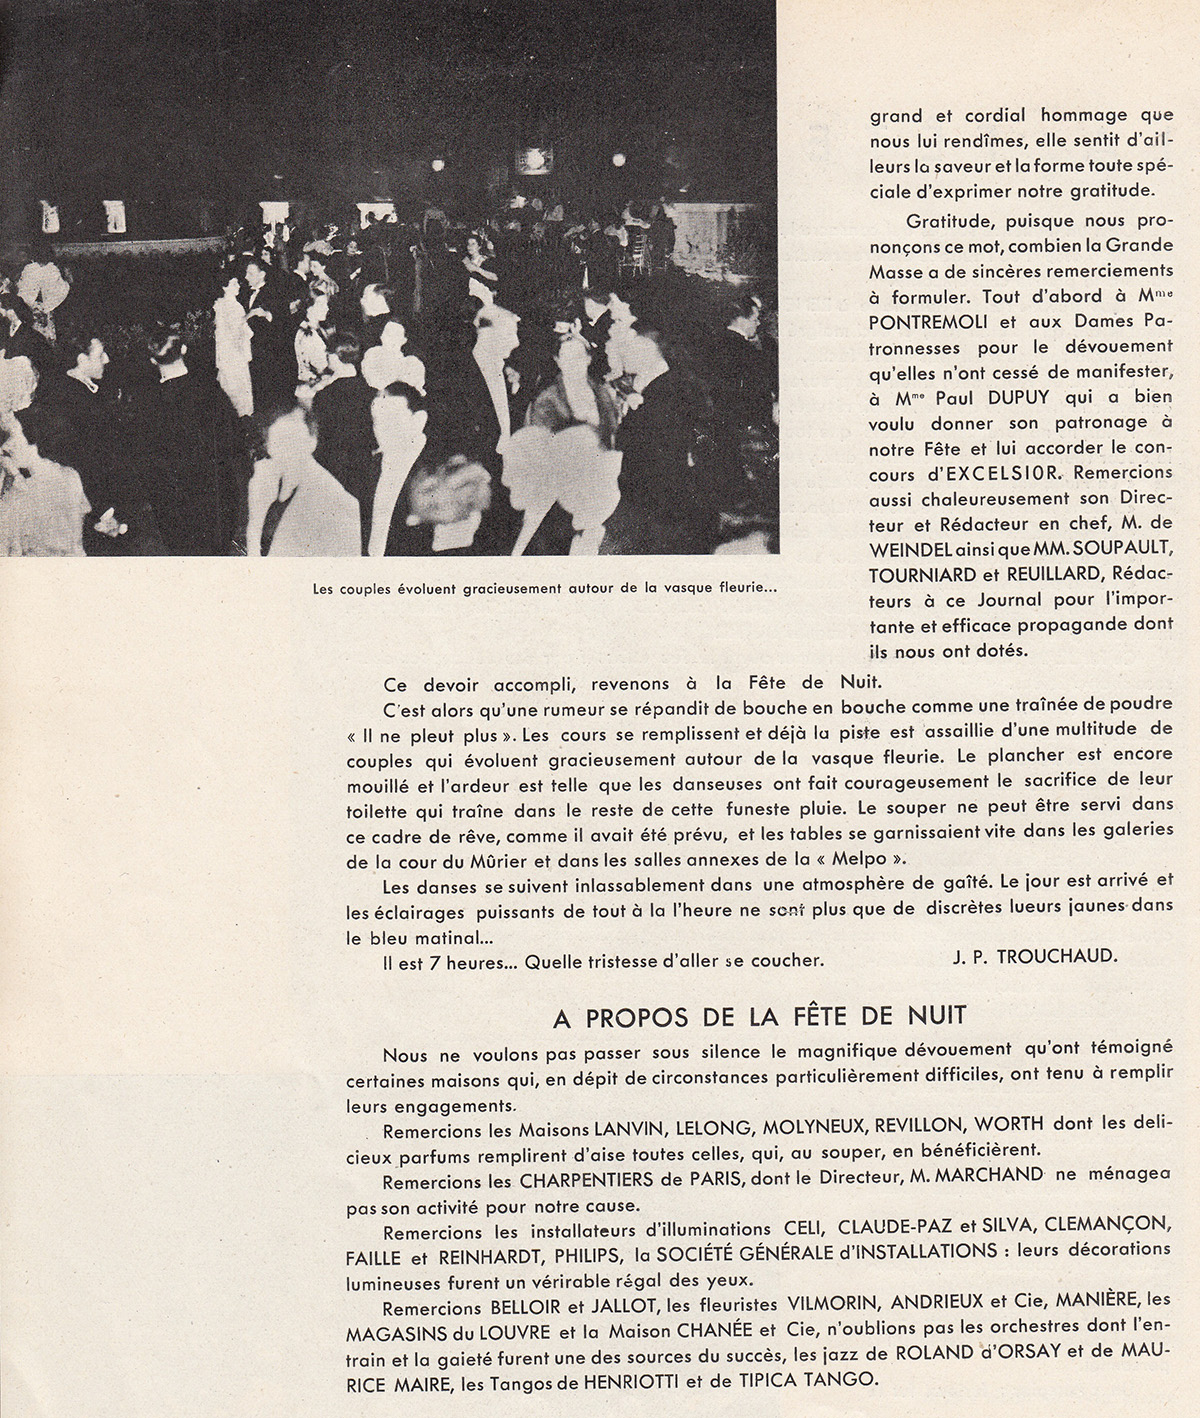 193606_Bulletin-GMBA_Recit-Bal-par-Trouchaud_Page-2.jpg